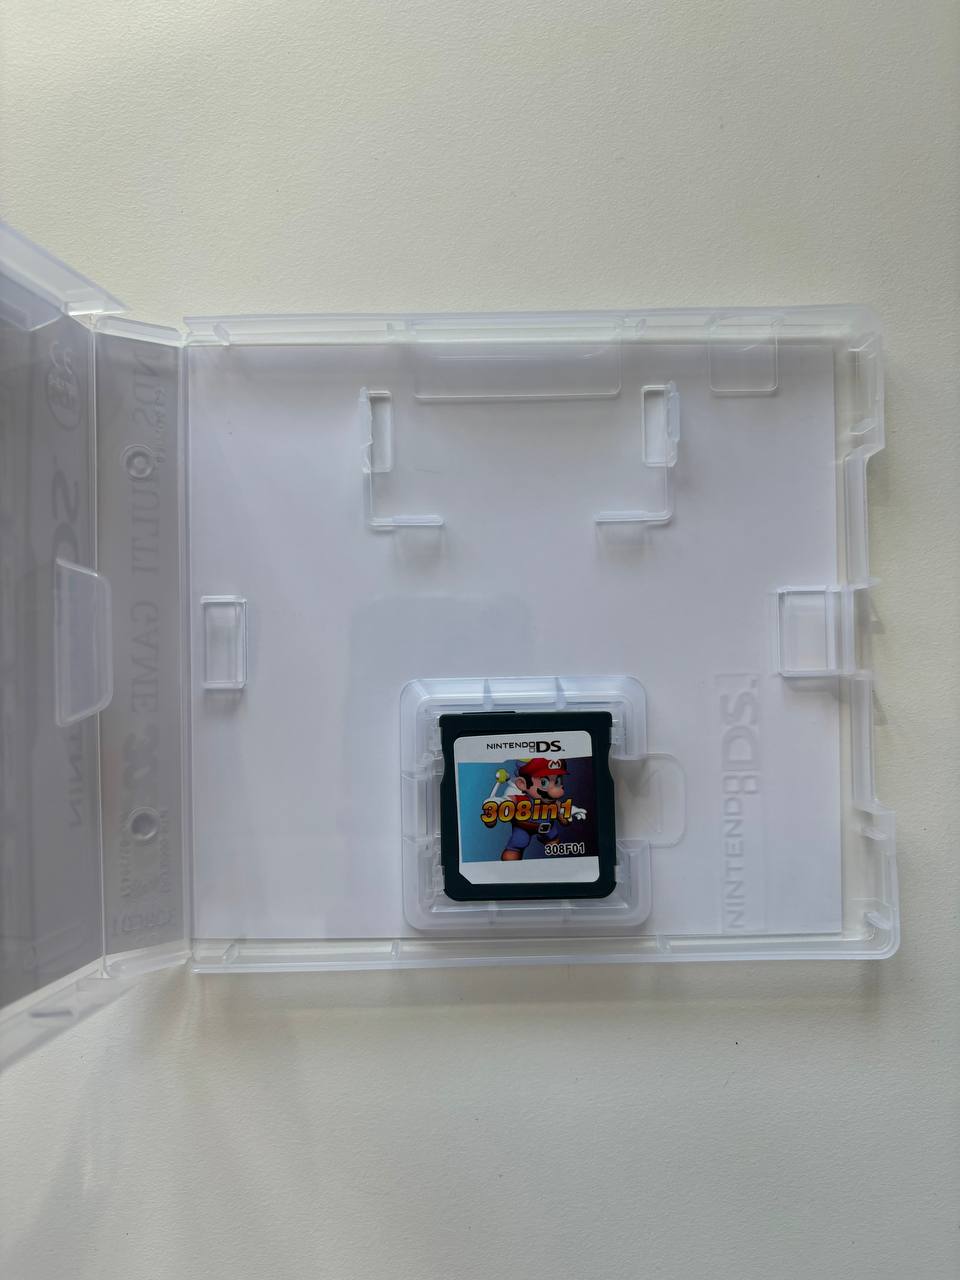 Multi Game 308 in 1 Nintendo DS 3DS